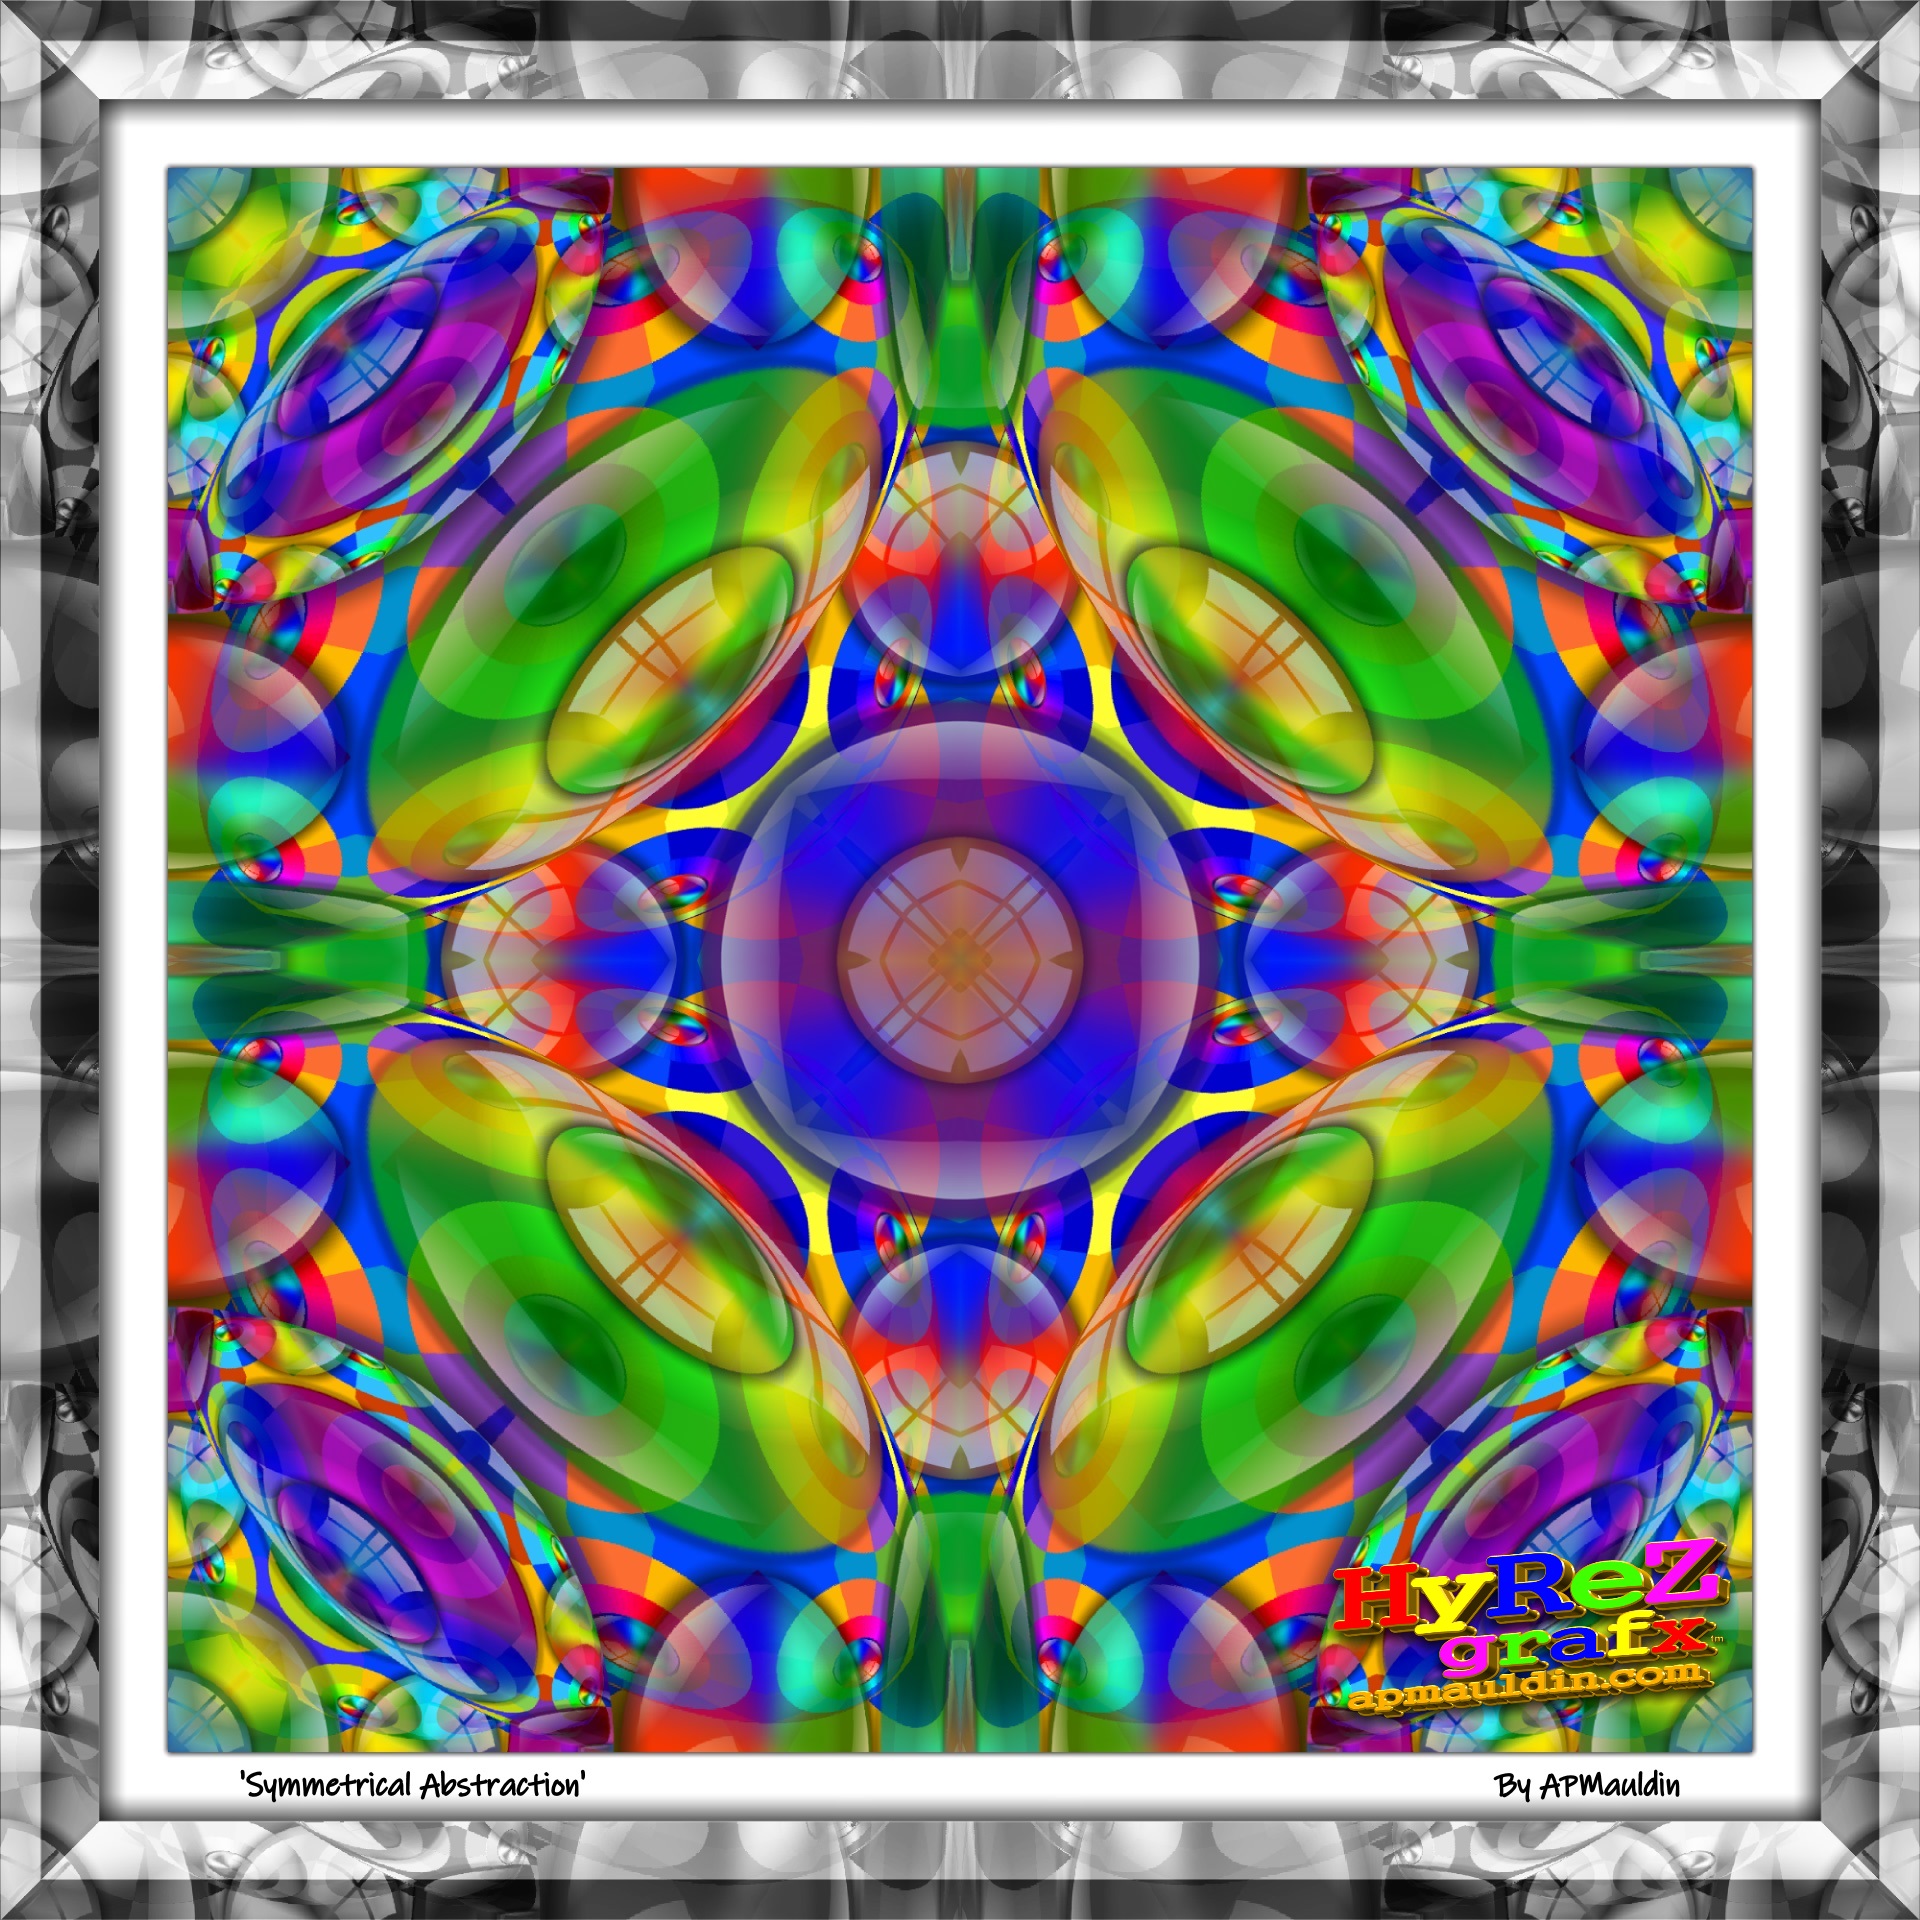 Symmetrical_Abstraction.jpg